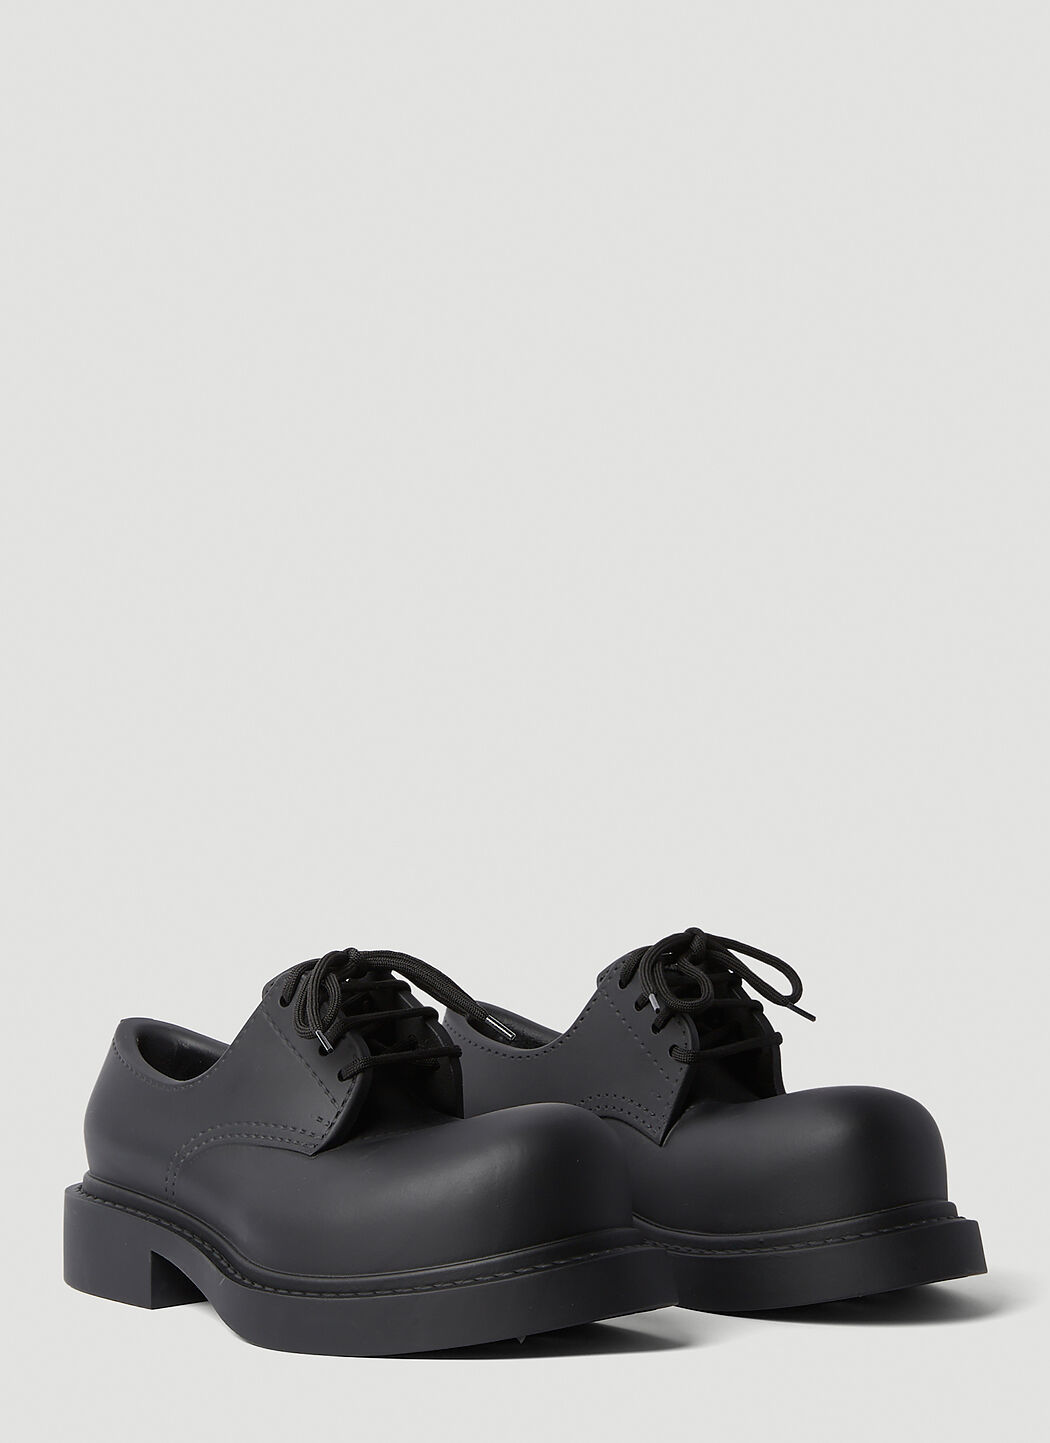 Balenciaga Steroid Derby Shoes in Black | LN-CC